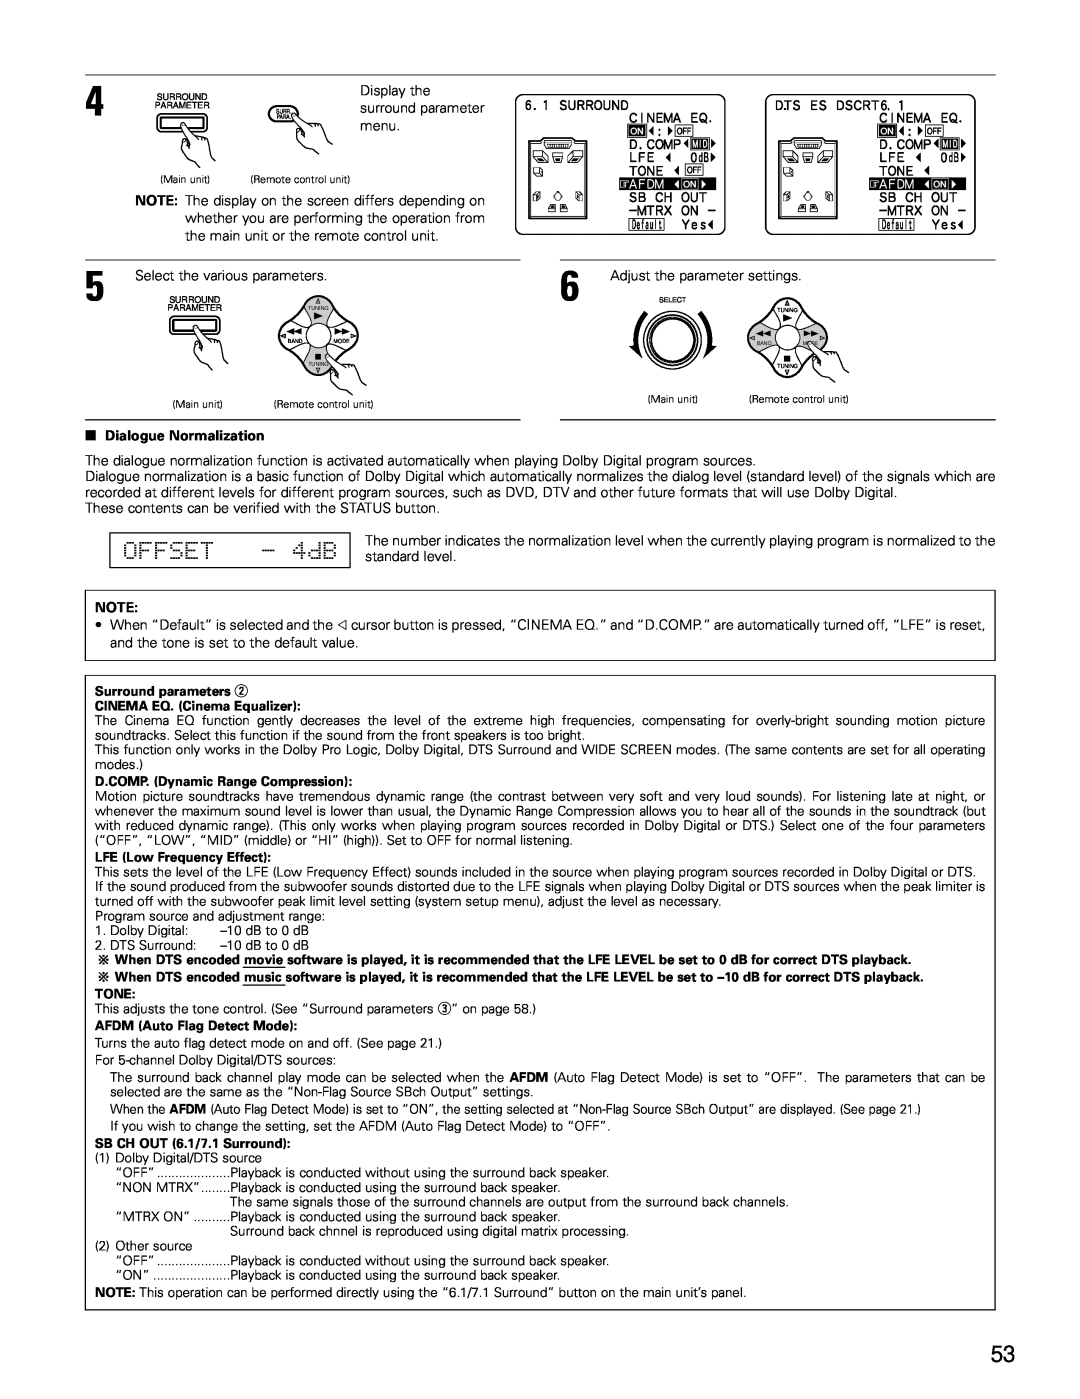 Denon AVR-3802 manual OFFSET - 4dB, 2Dialogue Normalization 